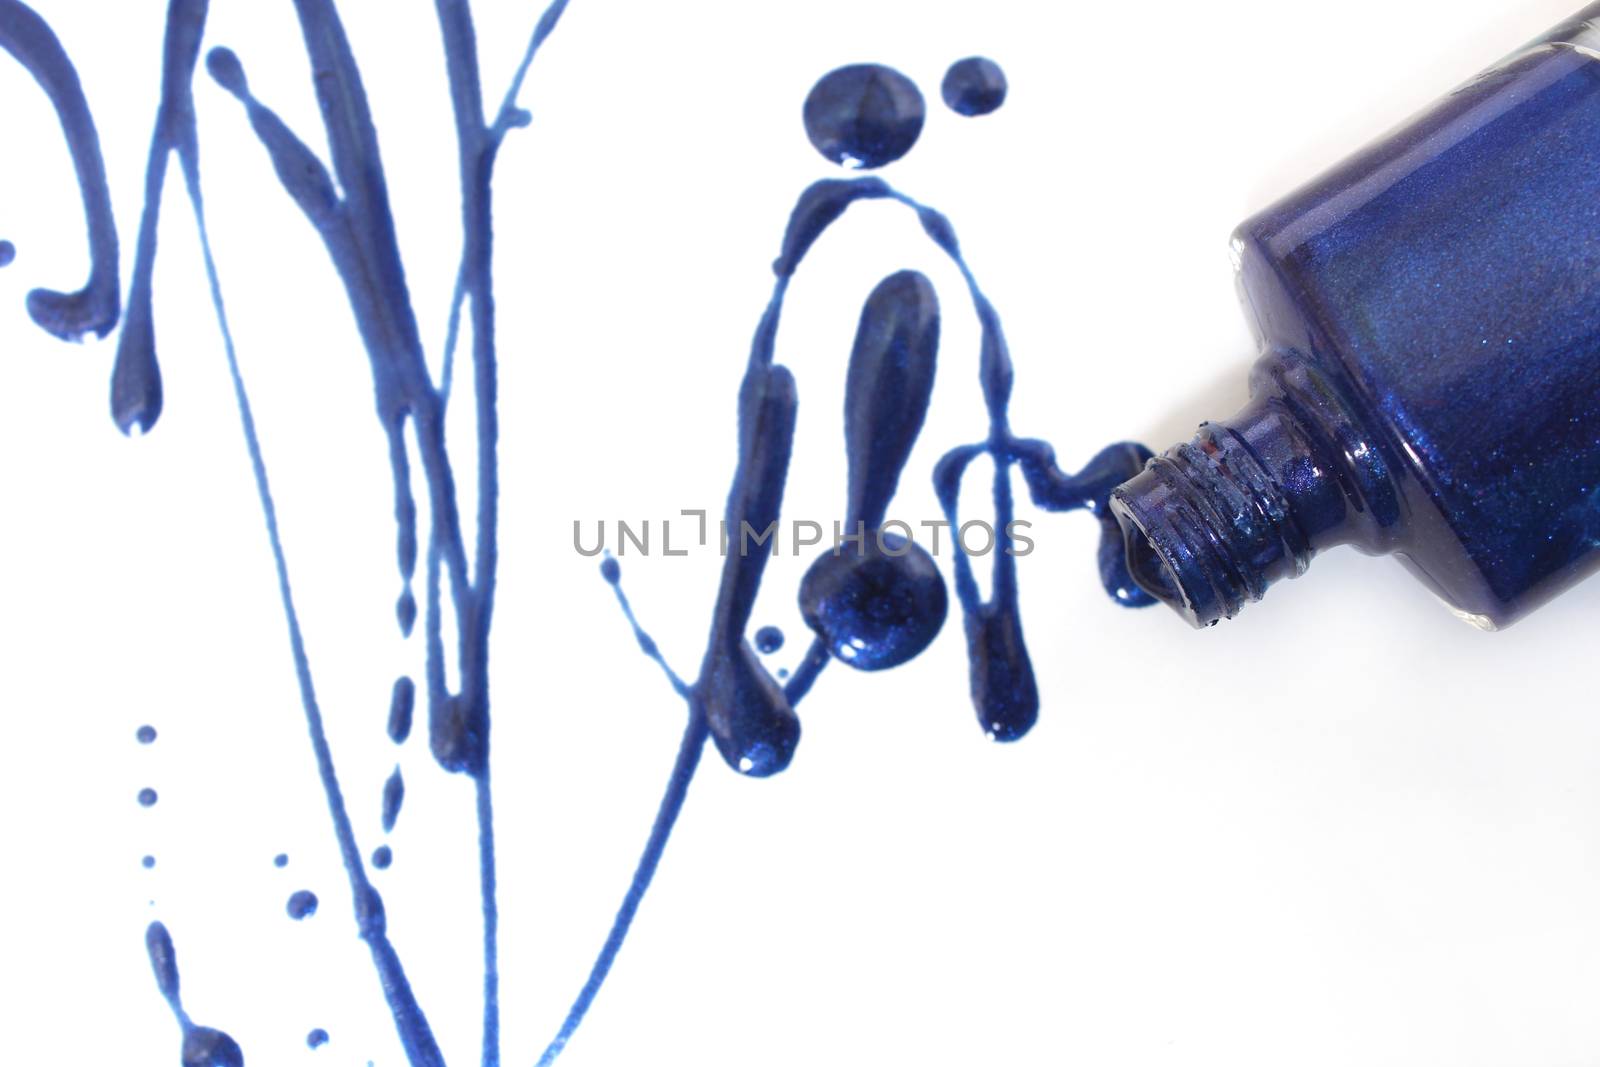 Spilled Blue Nail polish on White Background